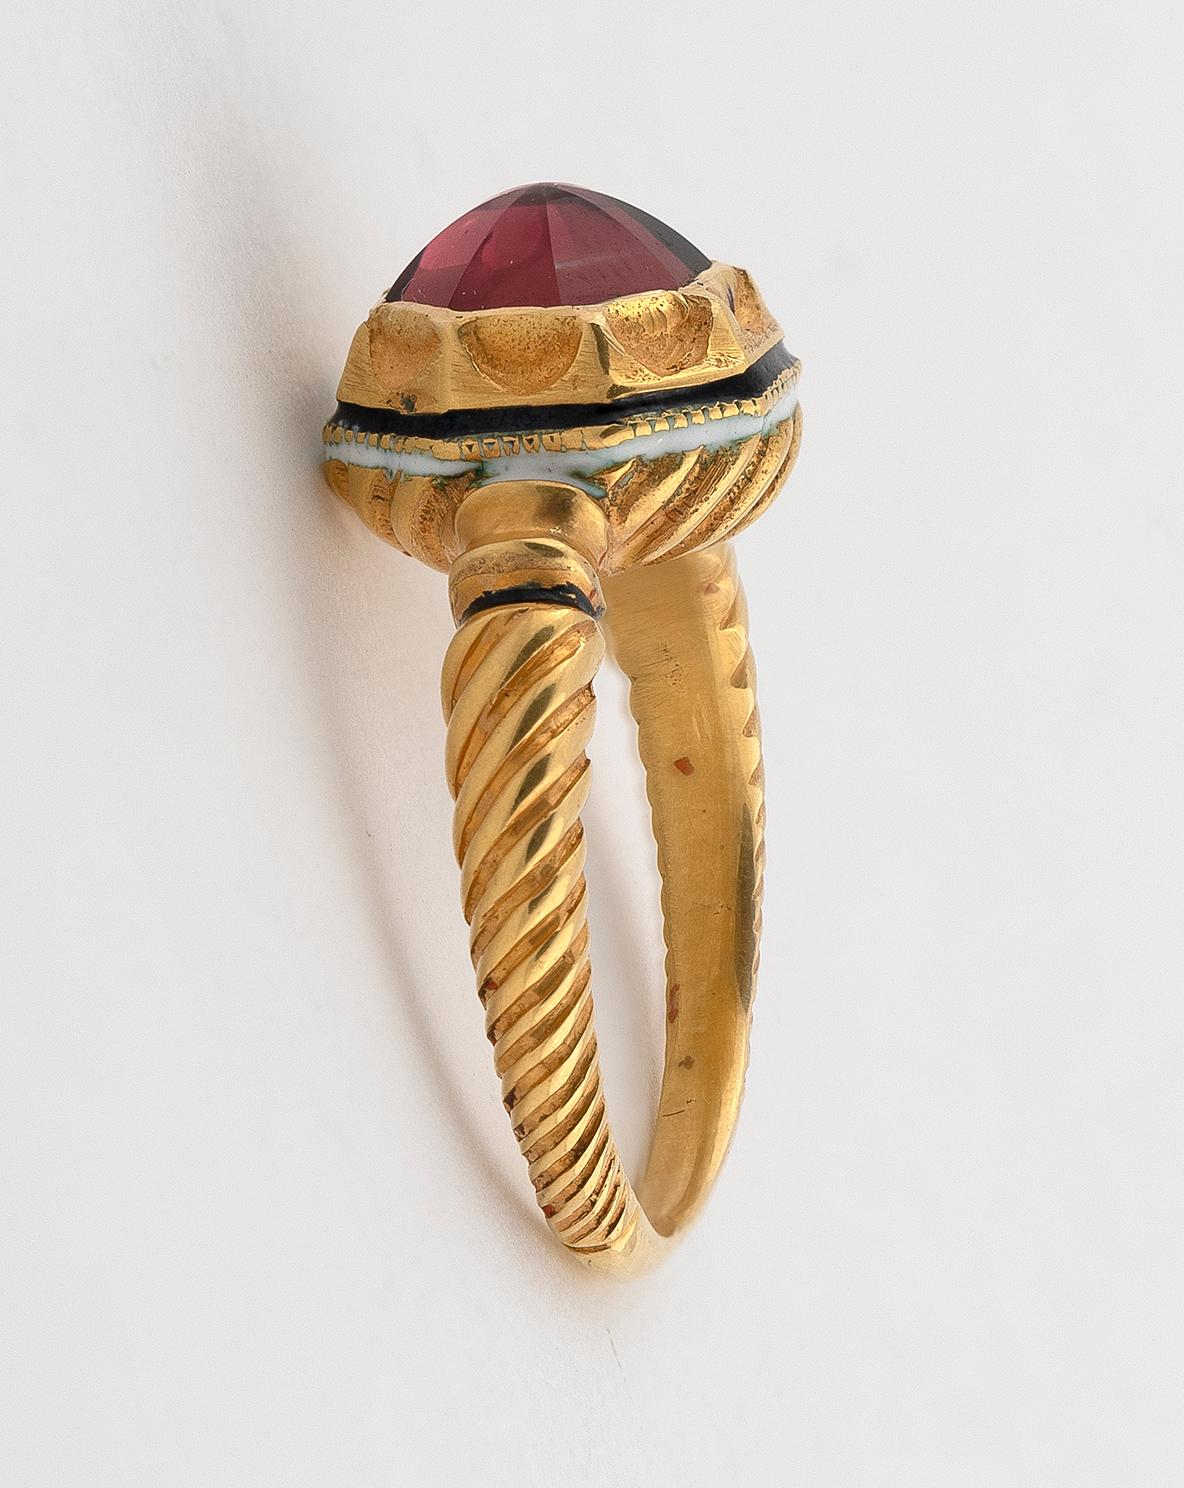 Renaissance Revival 19th Century Neo-Renaissance Gold and Tourmaline Ring